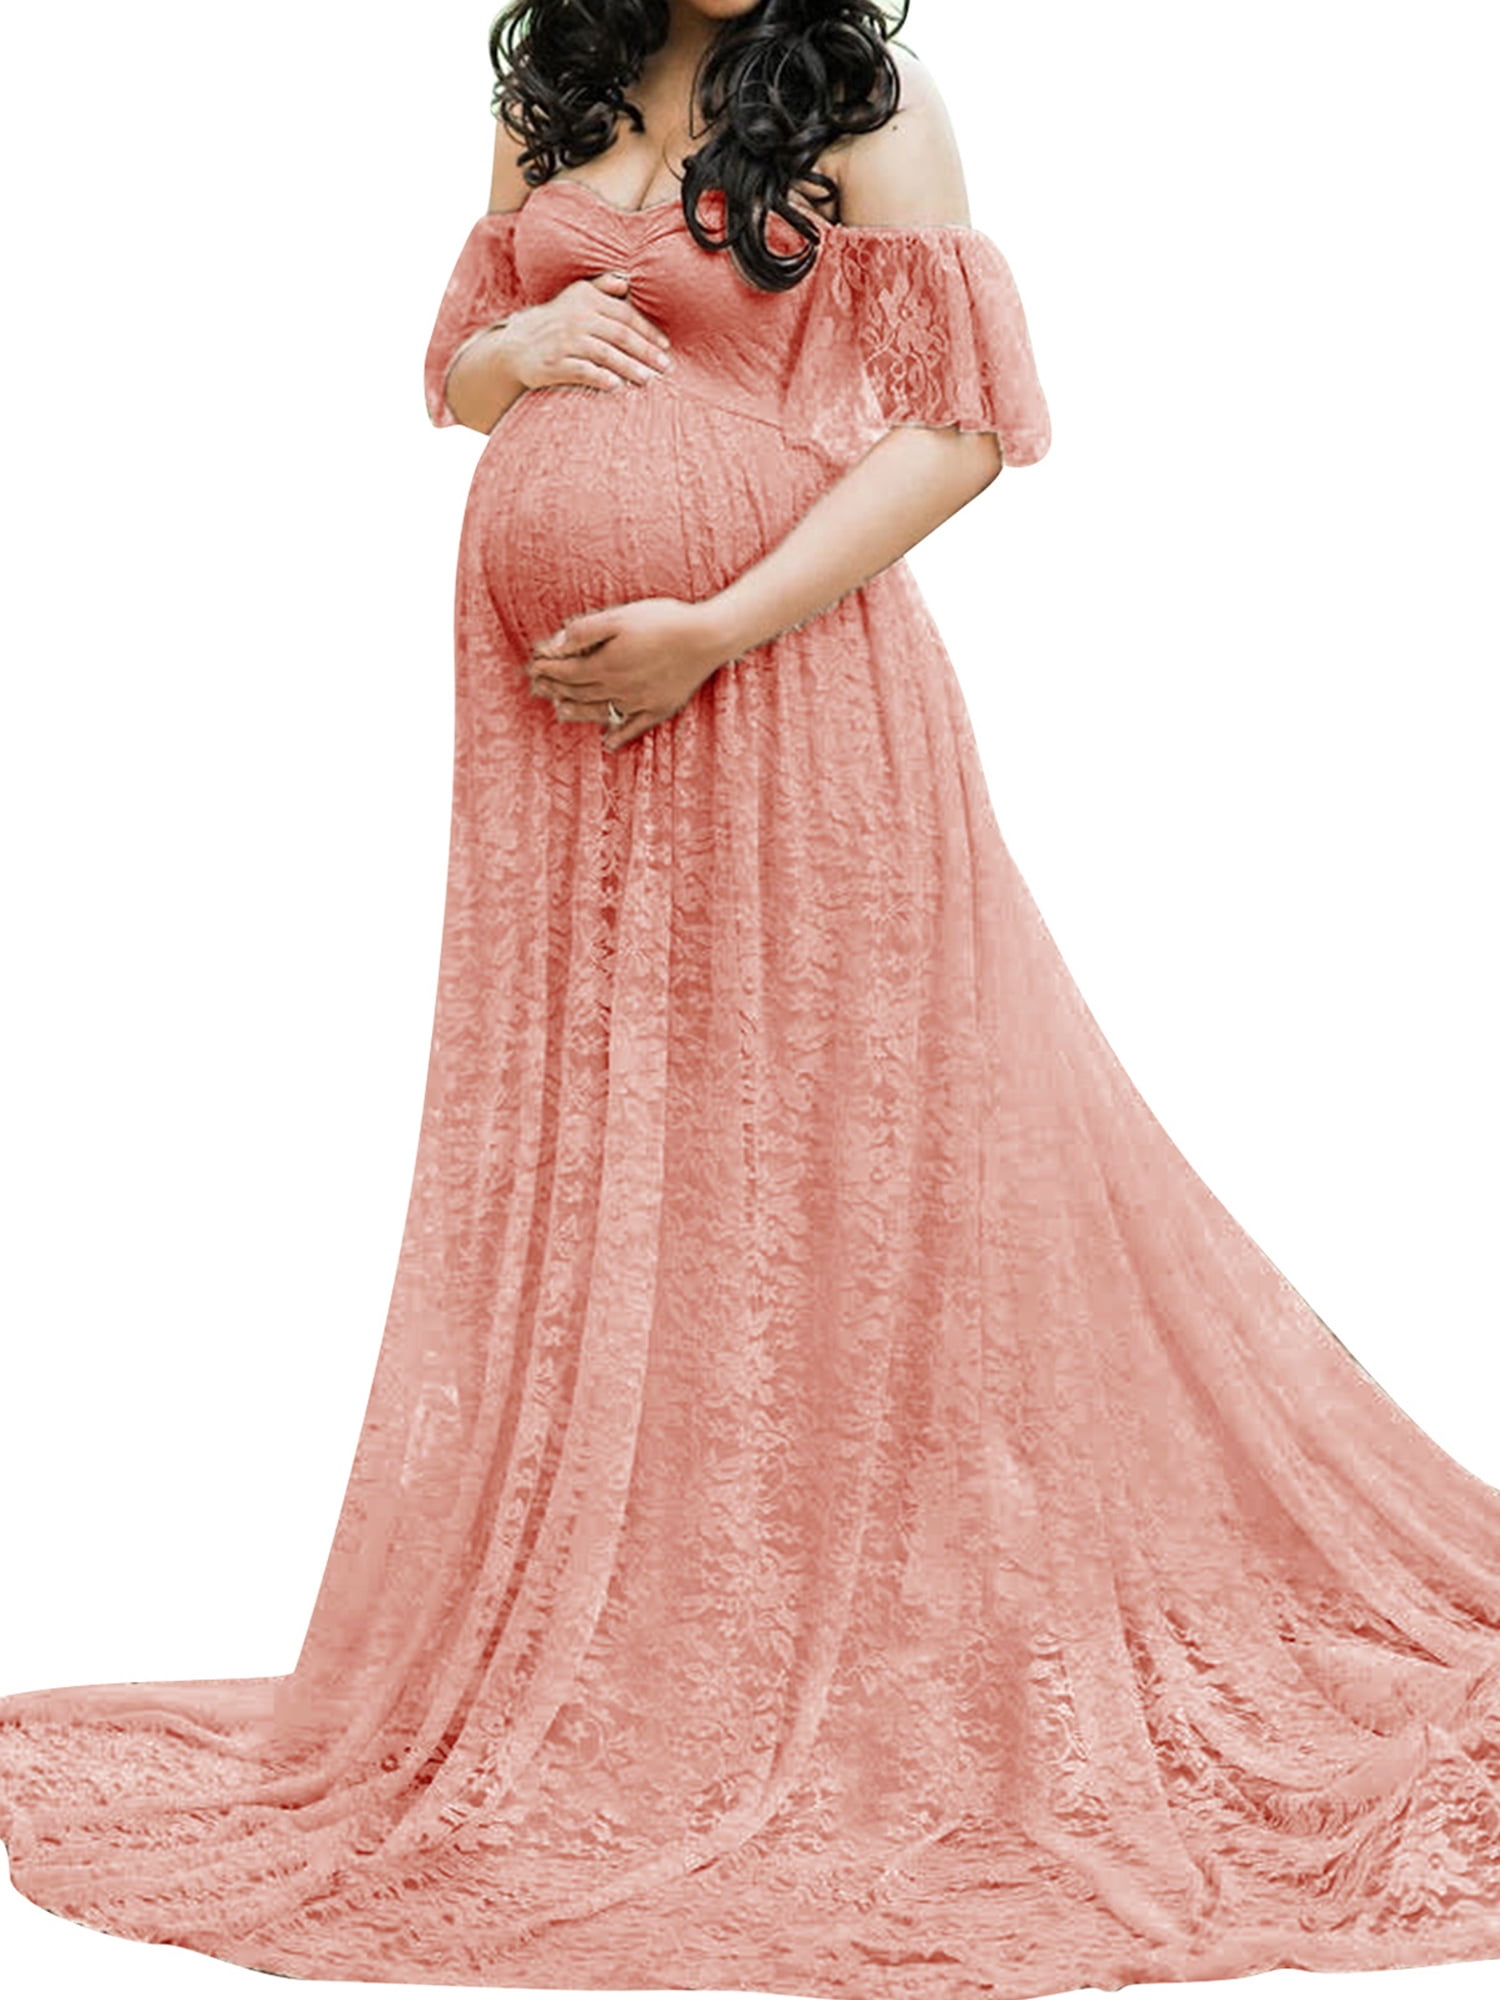 Women s Maternity Dress Off Shoulder Lace Maxi Dress Elegant Baby Shower Photography Dress d16d347f 2123 4209 9b70 23fbdd0889c3.b3eea875a55552127ba147c30e8c5773